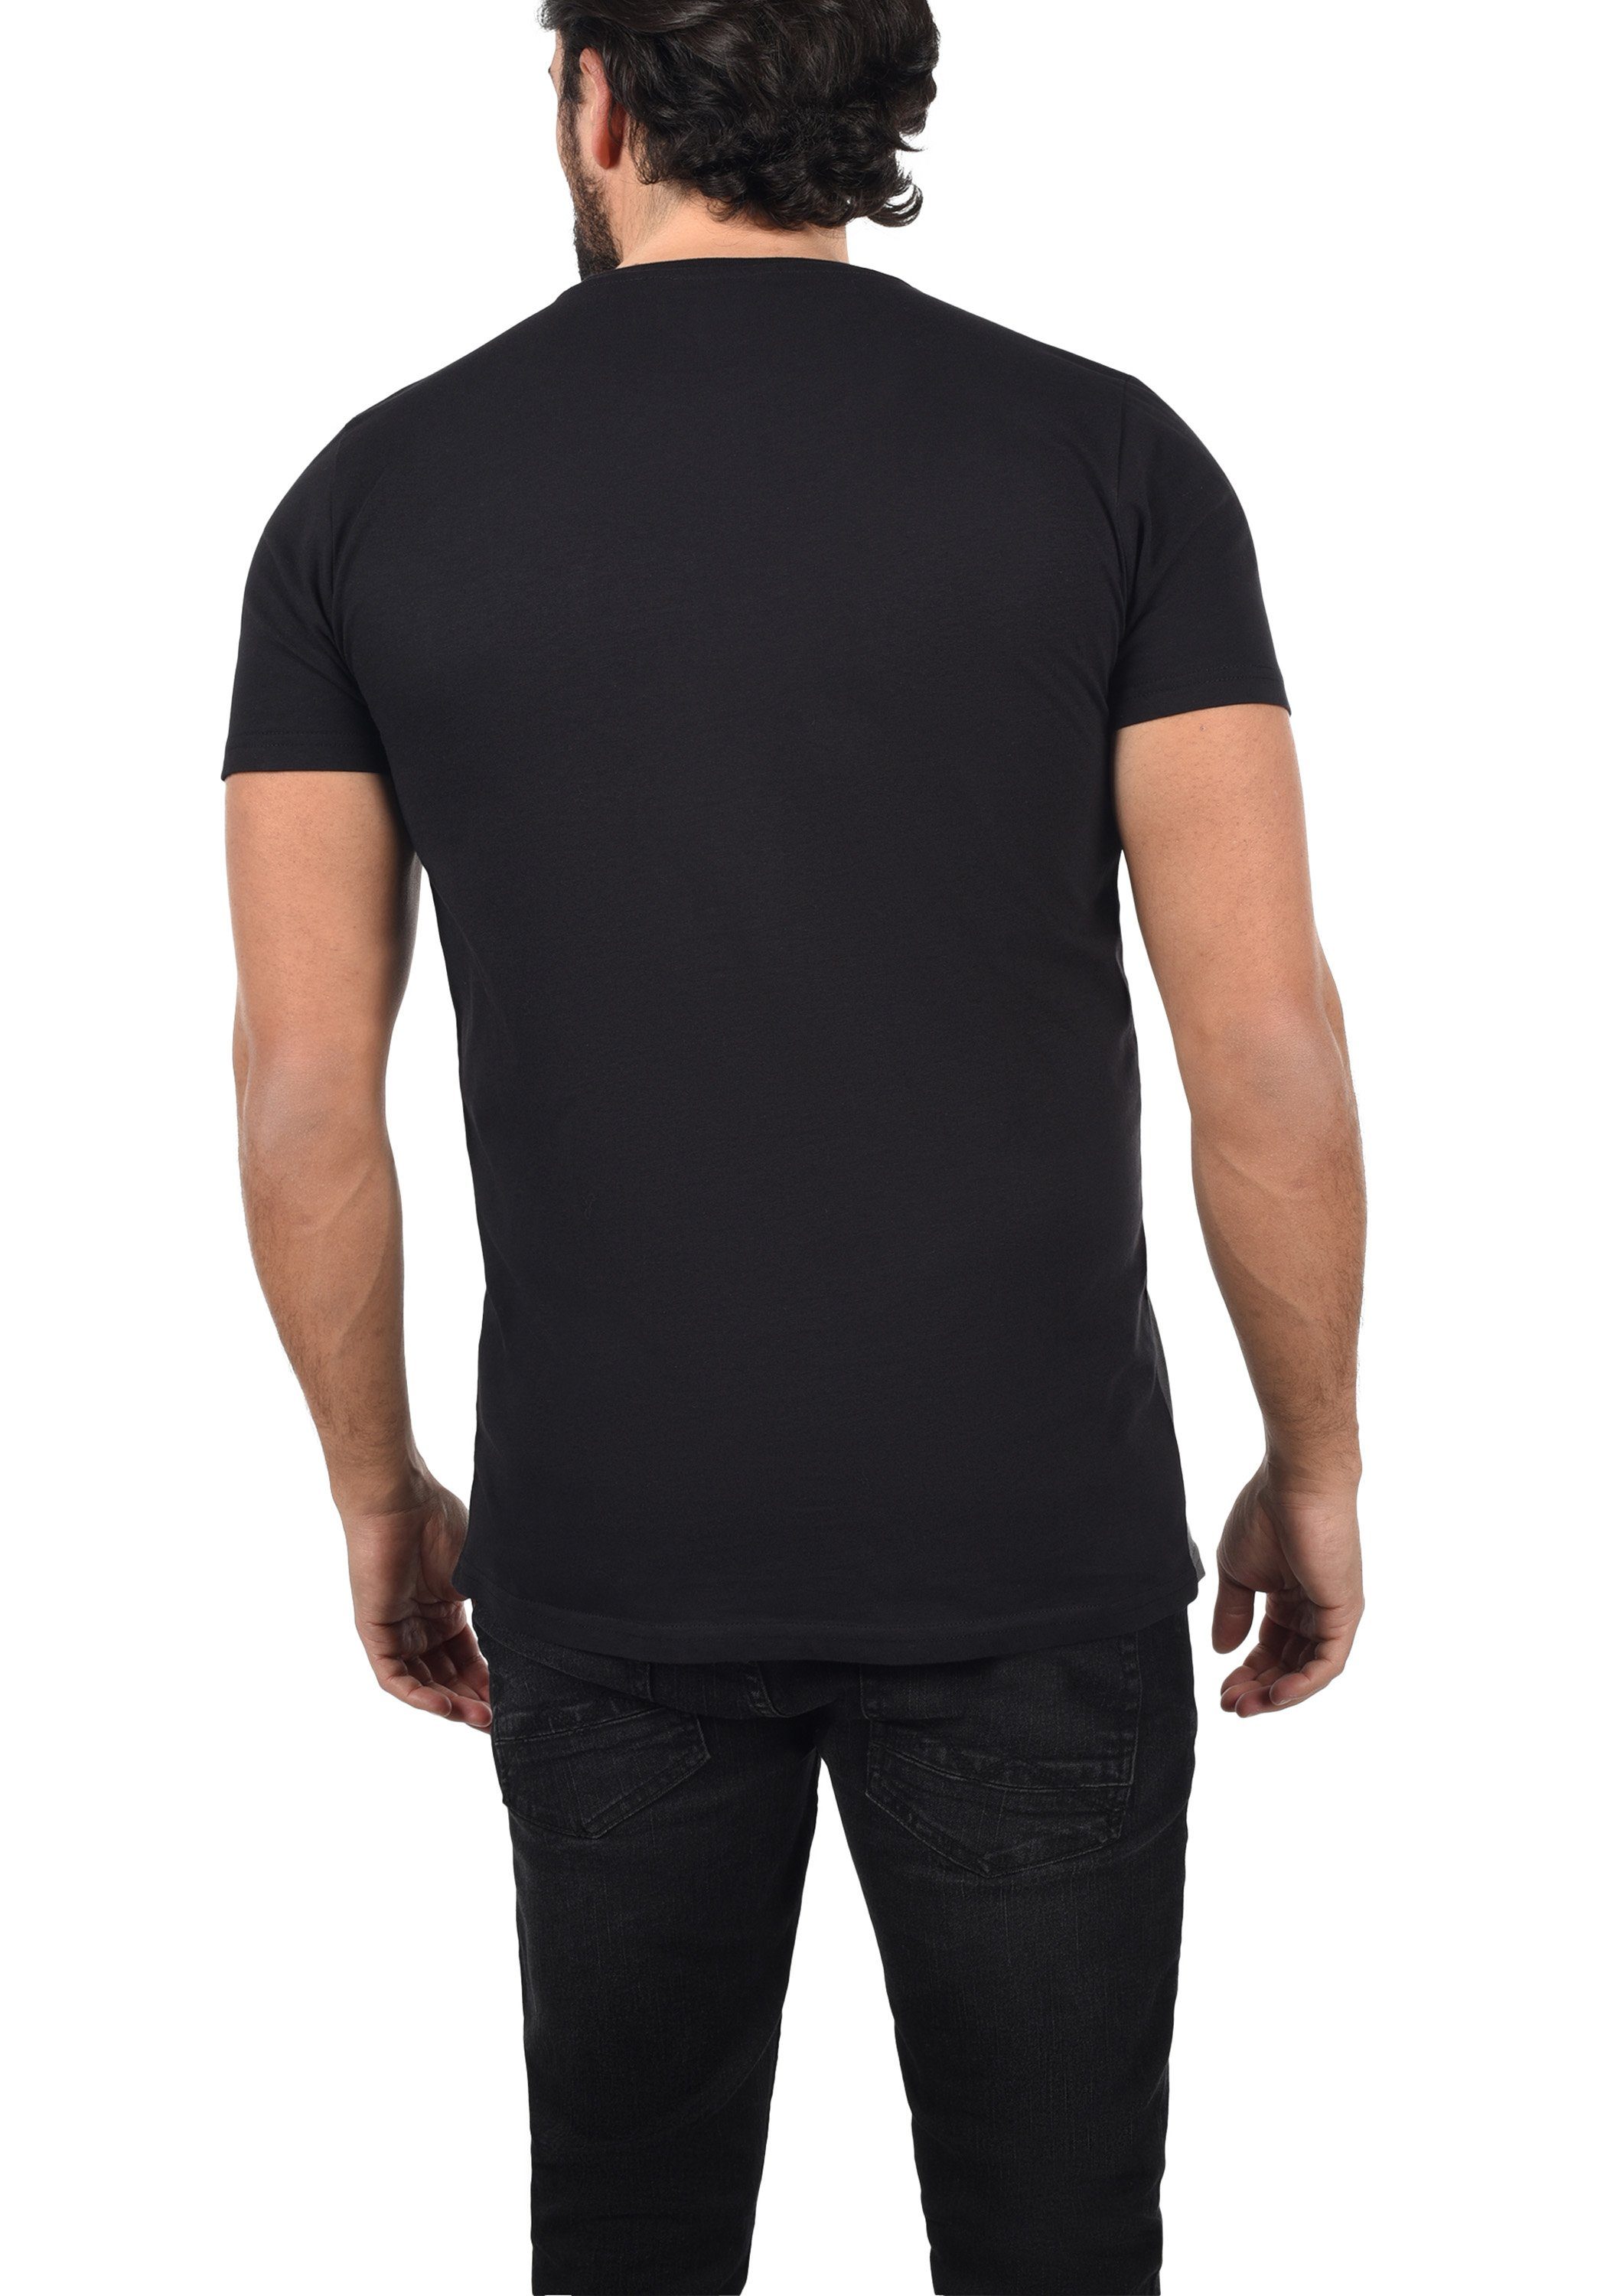 !Solid (9000) Black Rundhalsshirt SDMingo T-Shirt